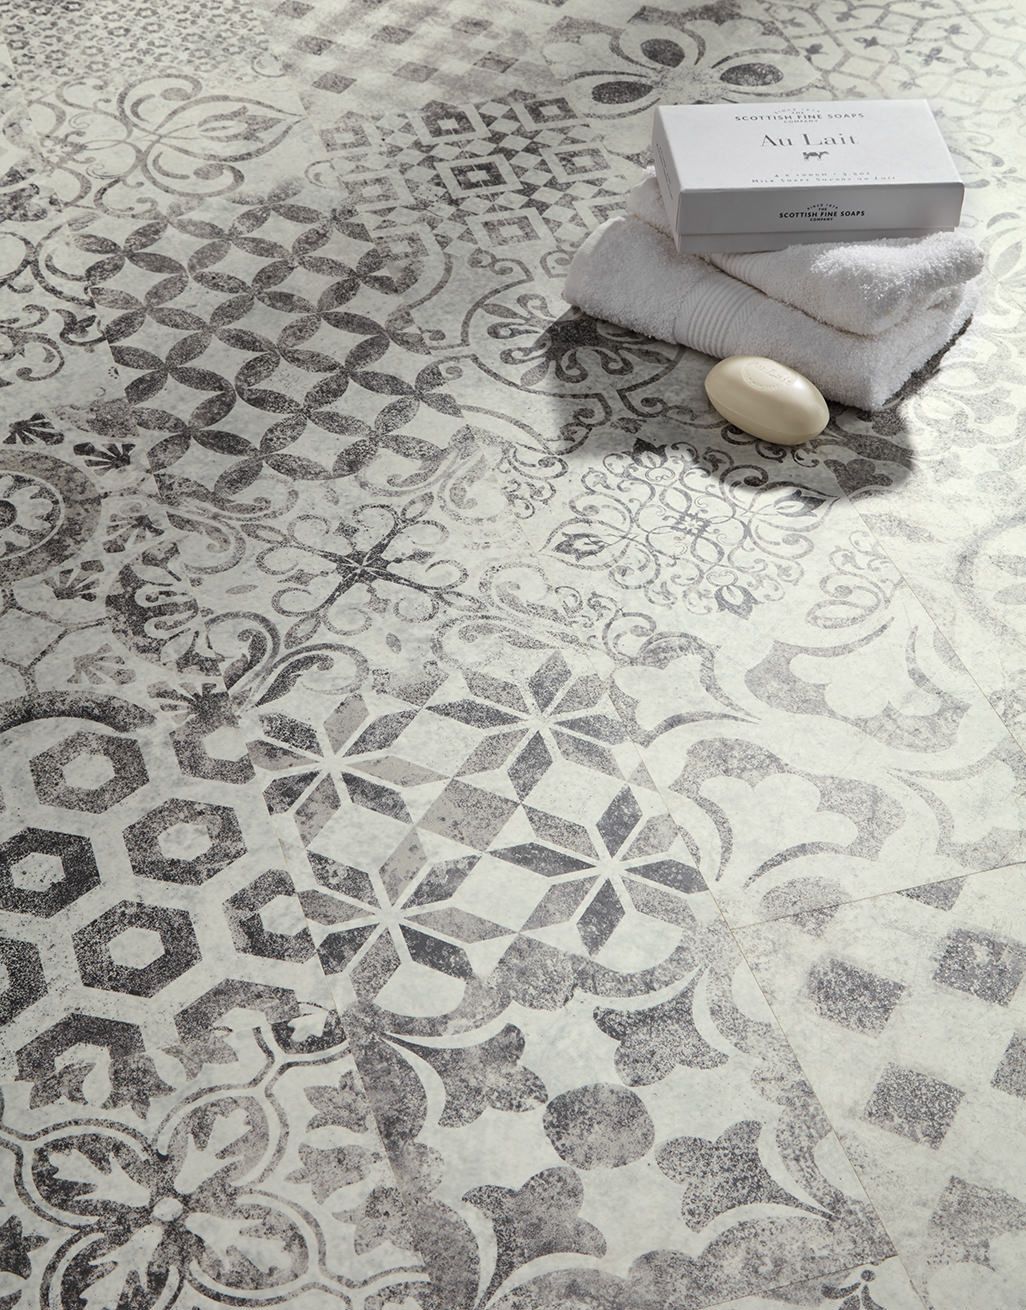 Valencia Tile Retro Black Laminate, Black And White Tile Laminate Flooring